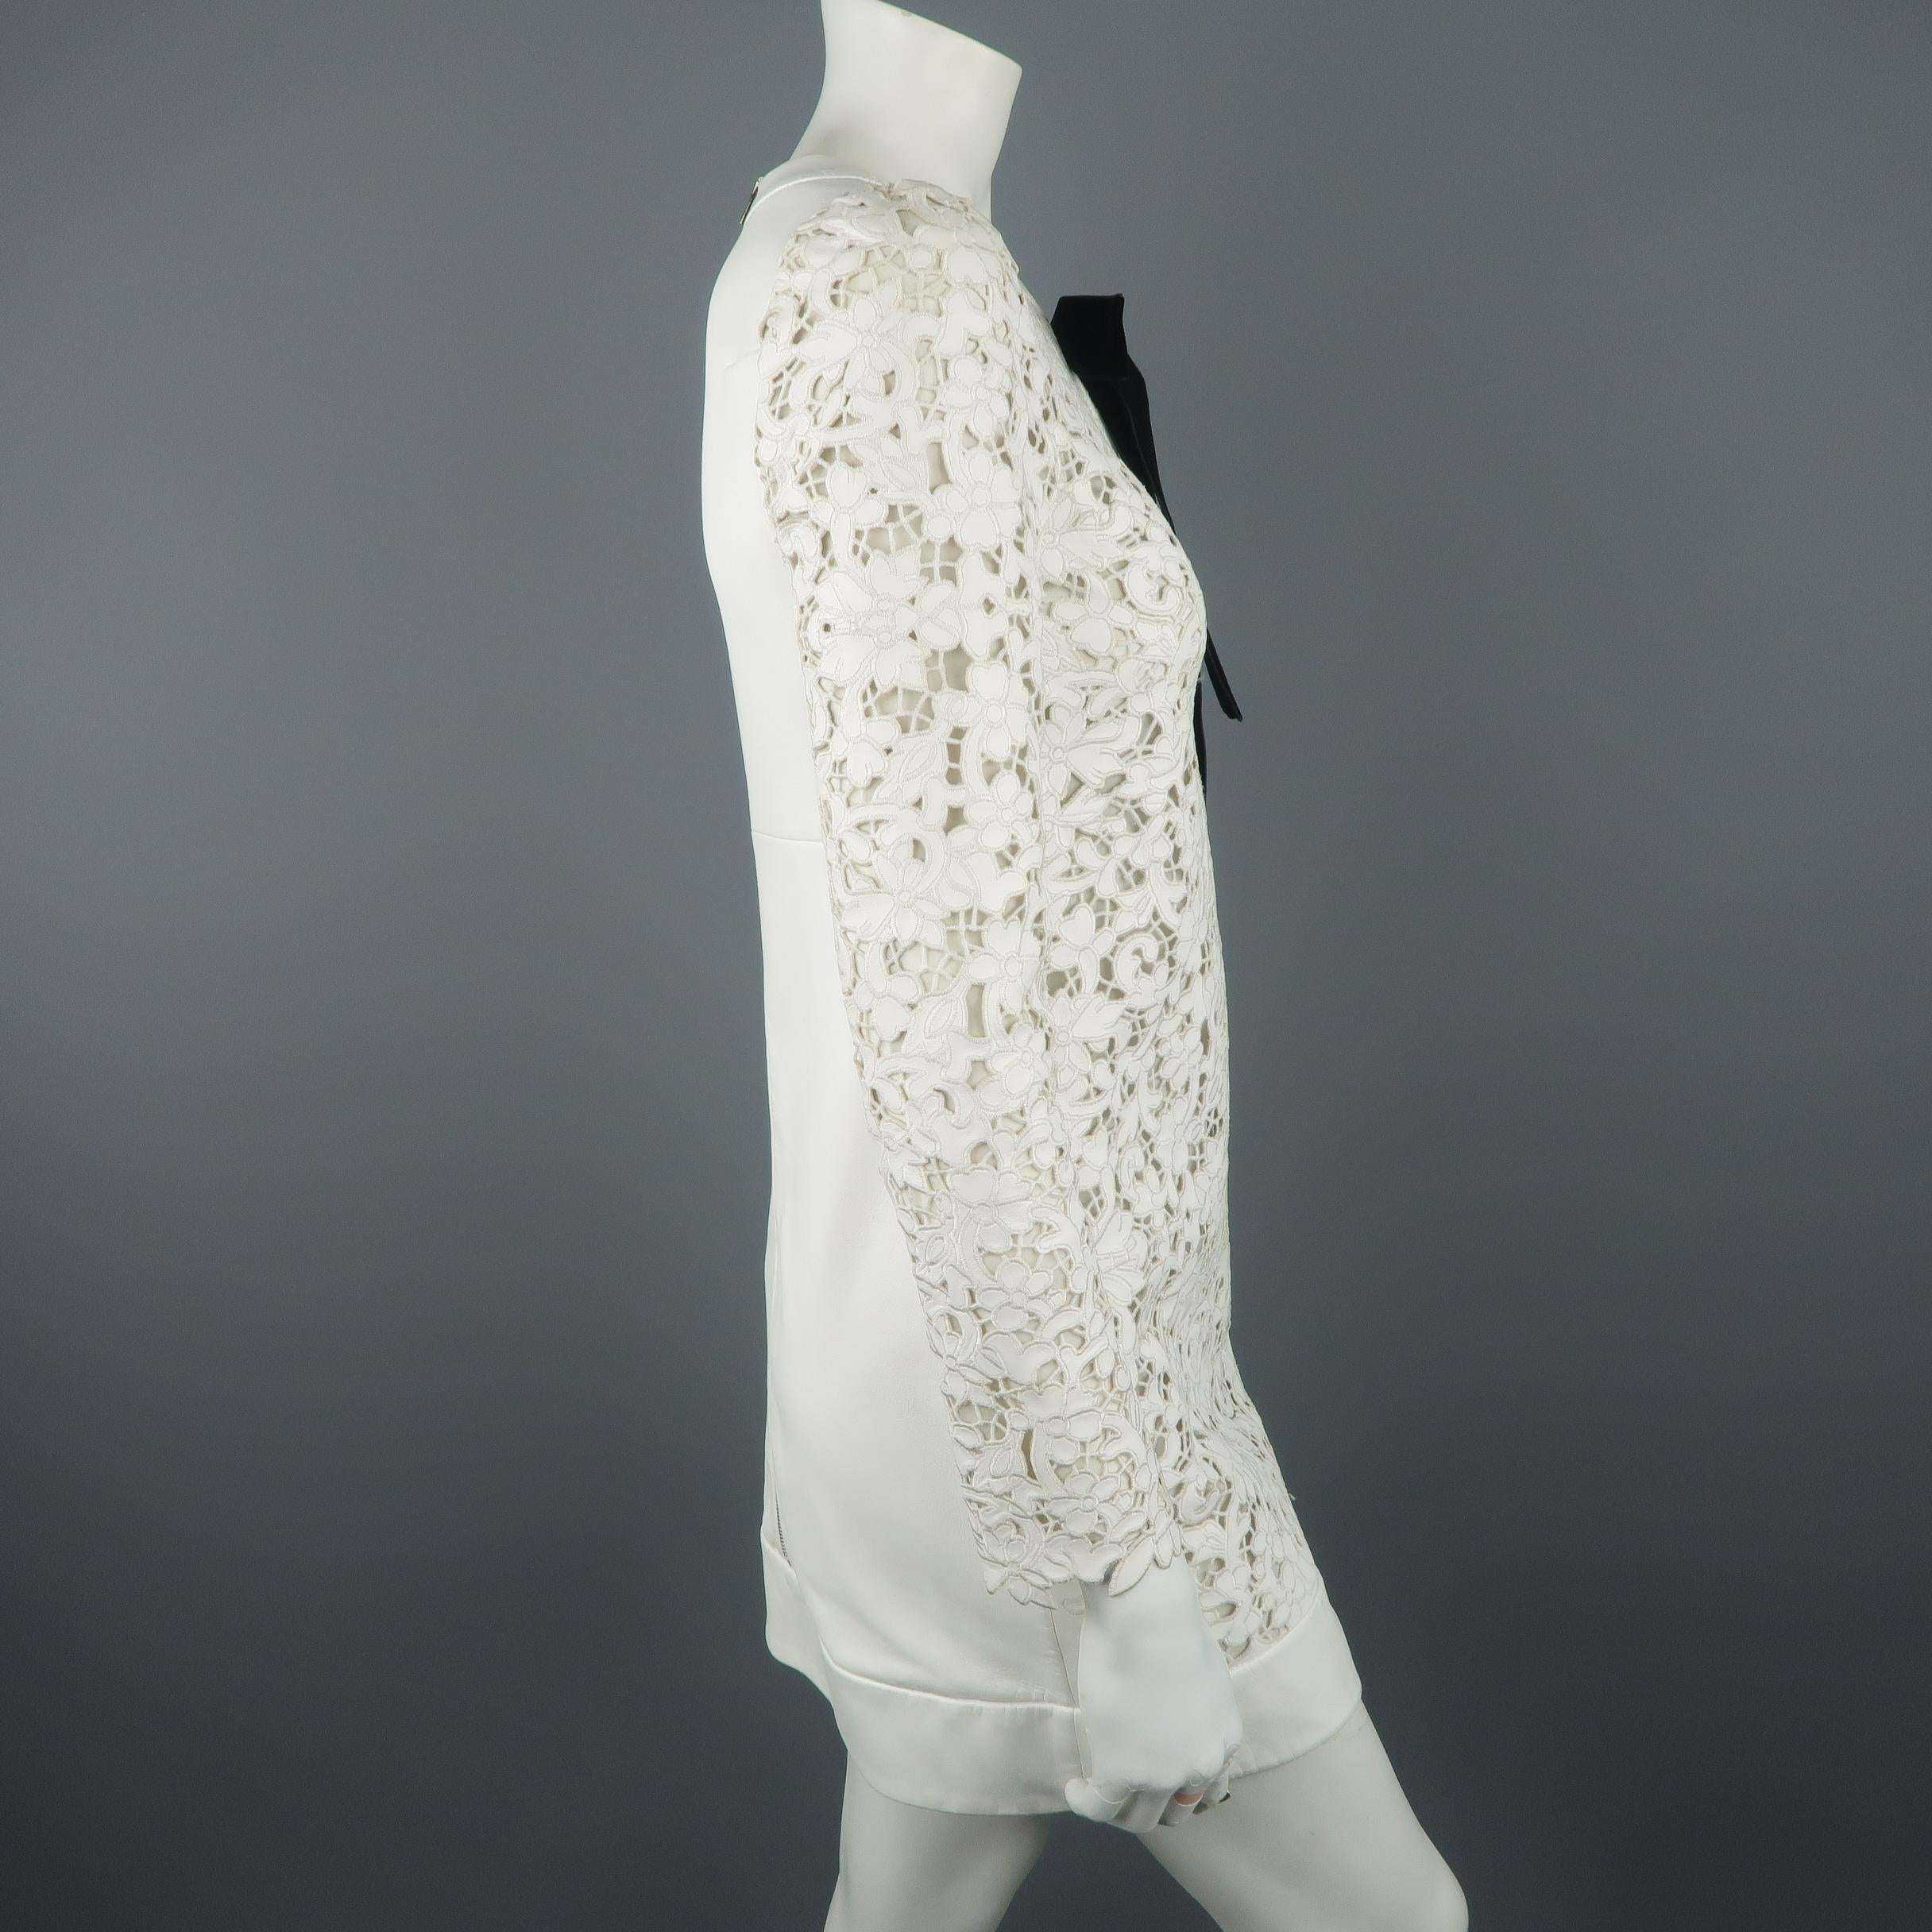 TOM FORD Dress - White Leather Lace Velvet Bow Shift Cocktail Dress 2